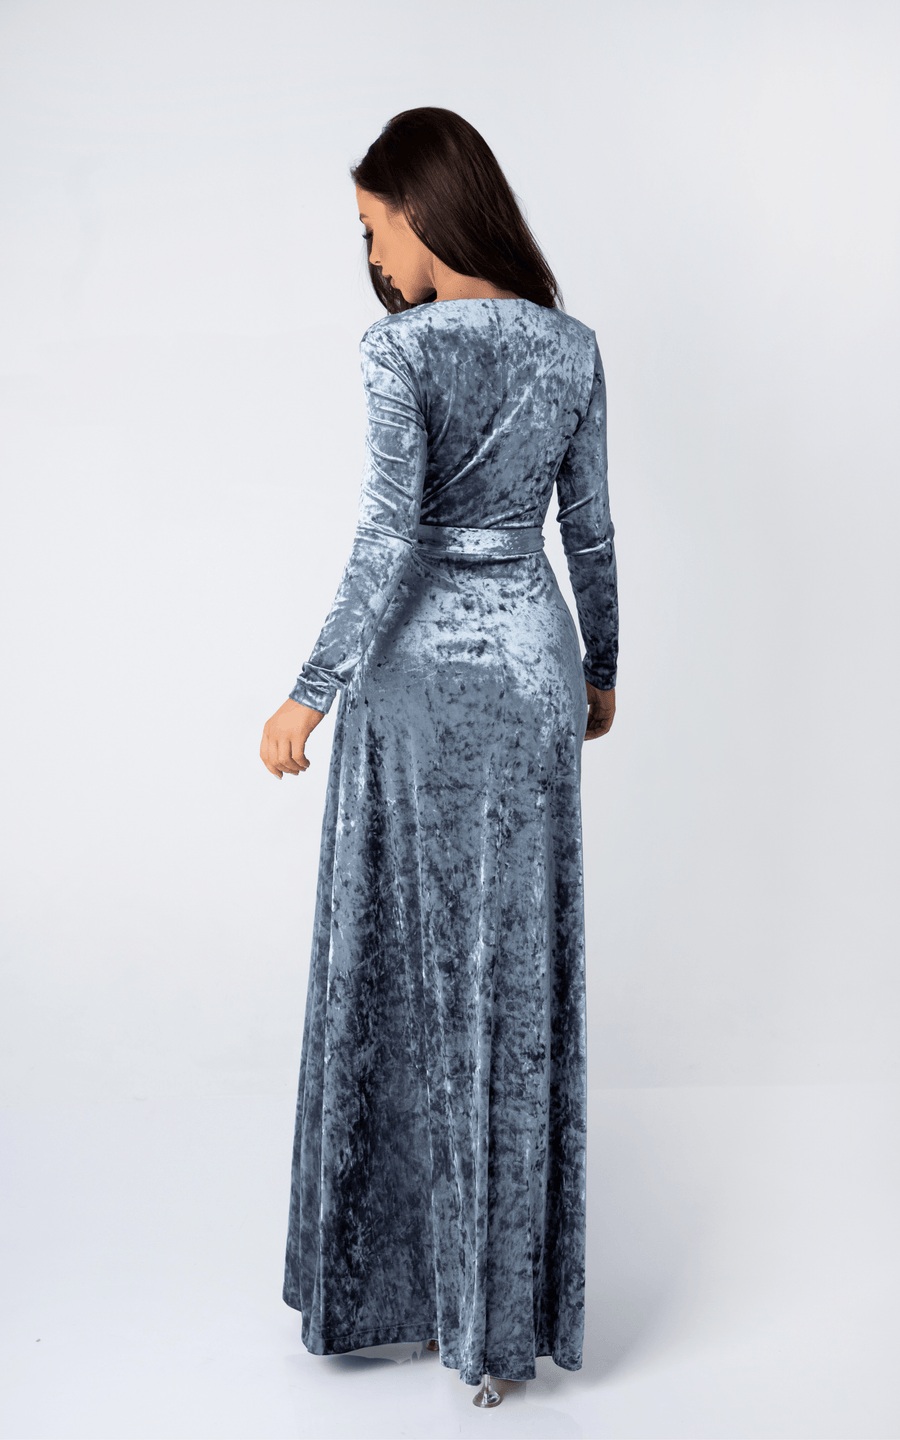 DELMI | Long Dress with Sleeves | Tatiana Tretyak Brand